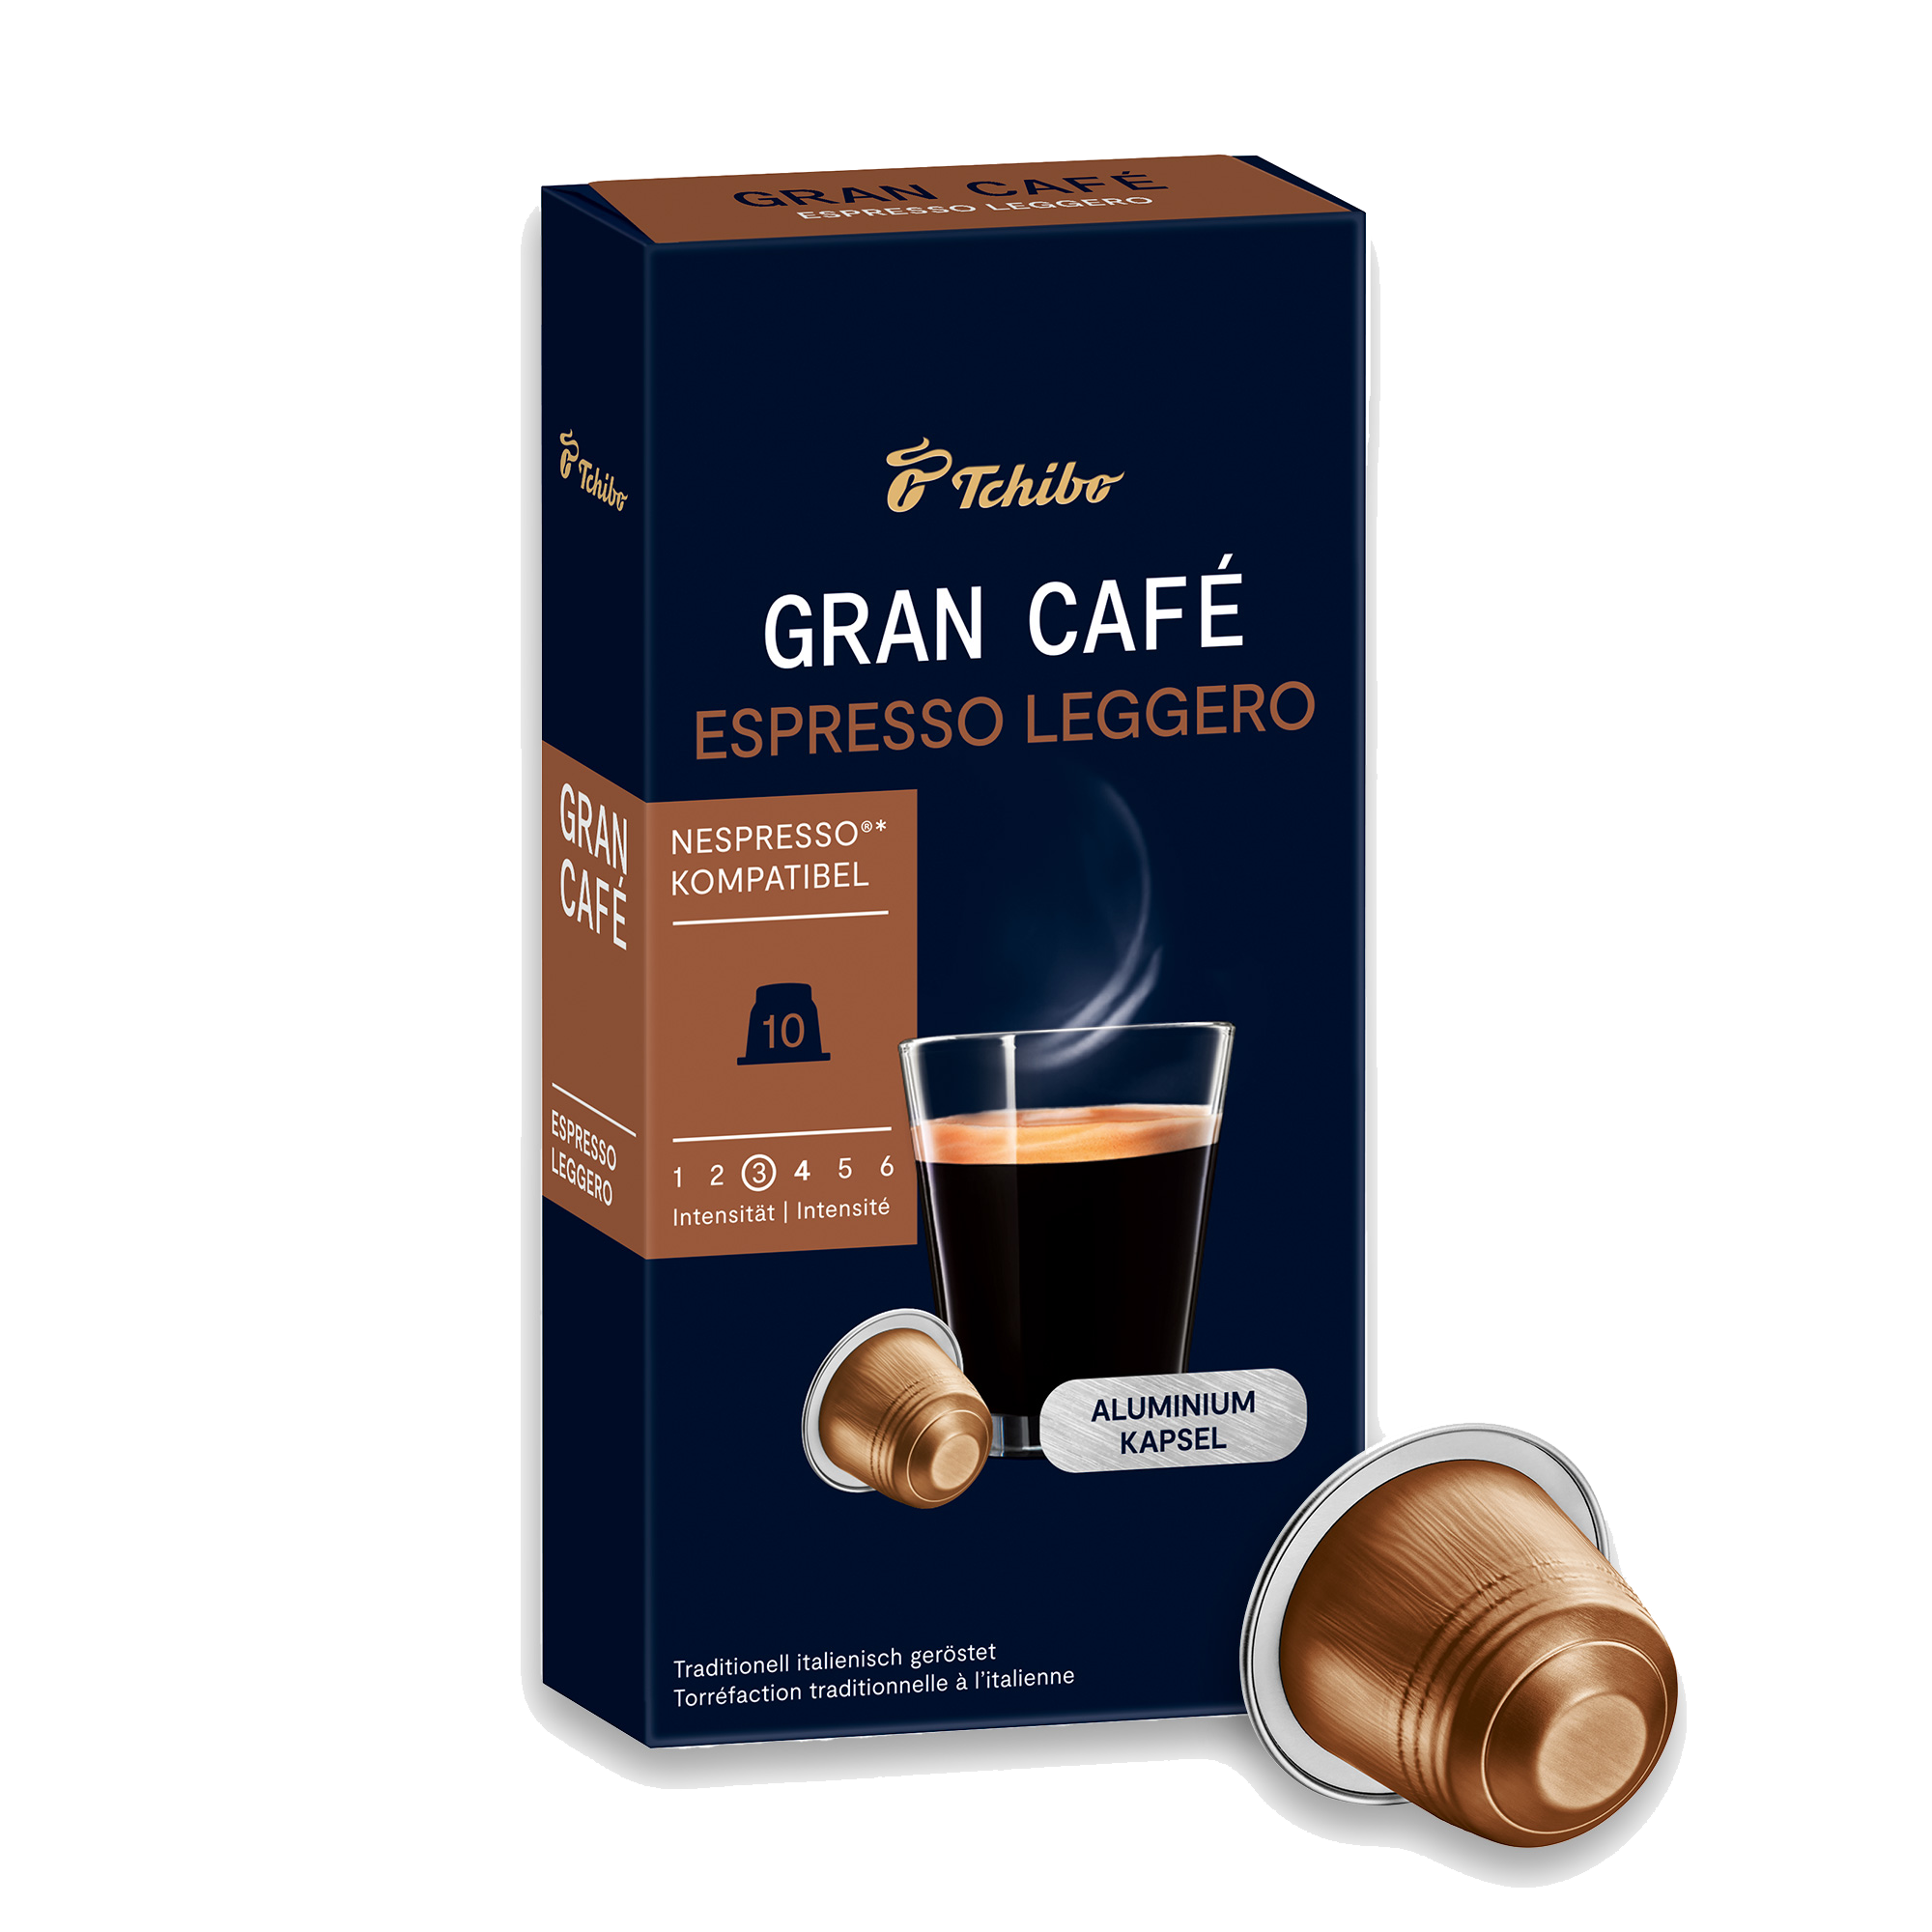 Gran Café Espresso - Aromatic with fine hints